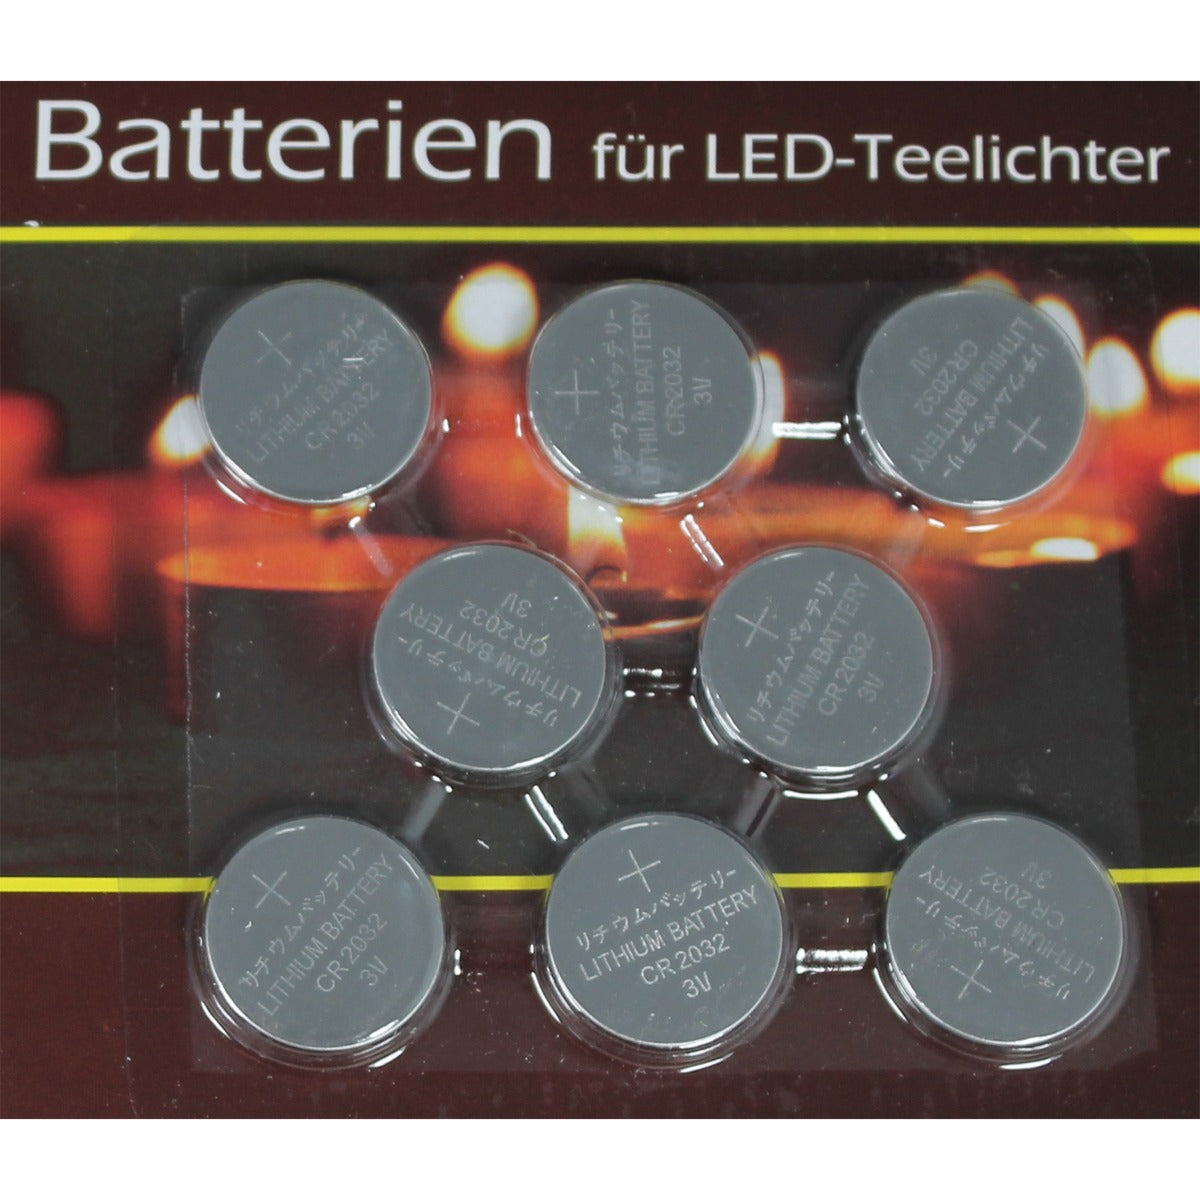 LED Lichterkette MICRO 4er Set à 10 Leuchten warmweiß Weichtnachtsbeleuchtung Batteriebetrieb für Innen inkl. Batterien